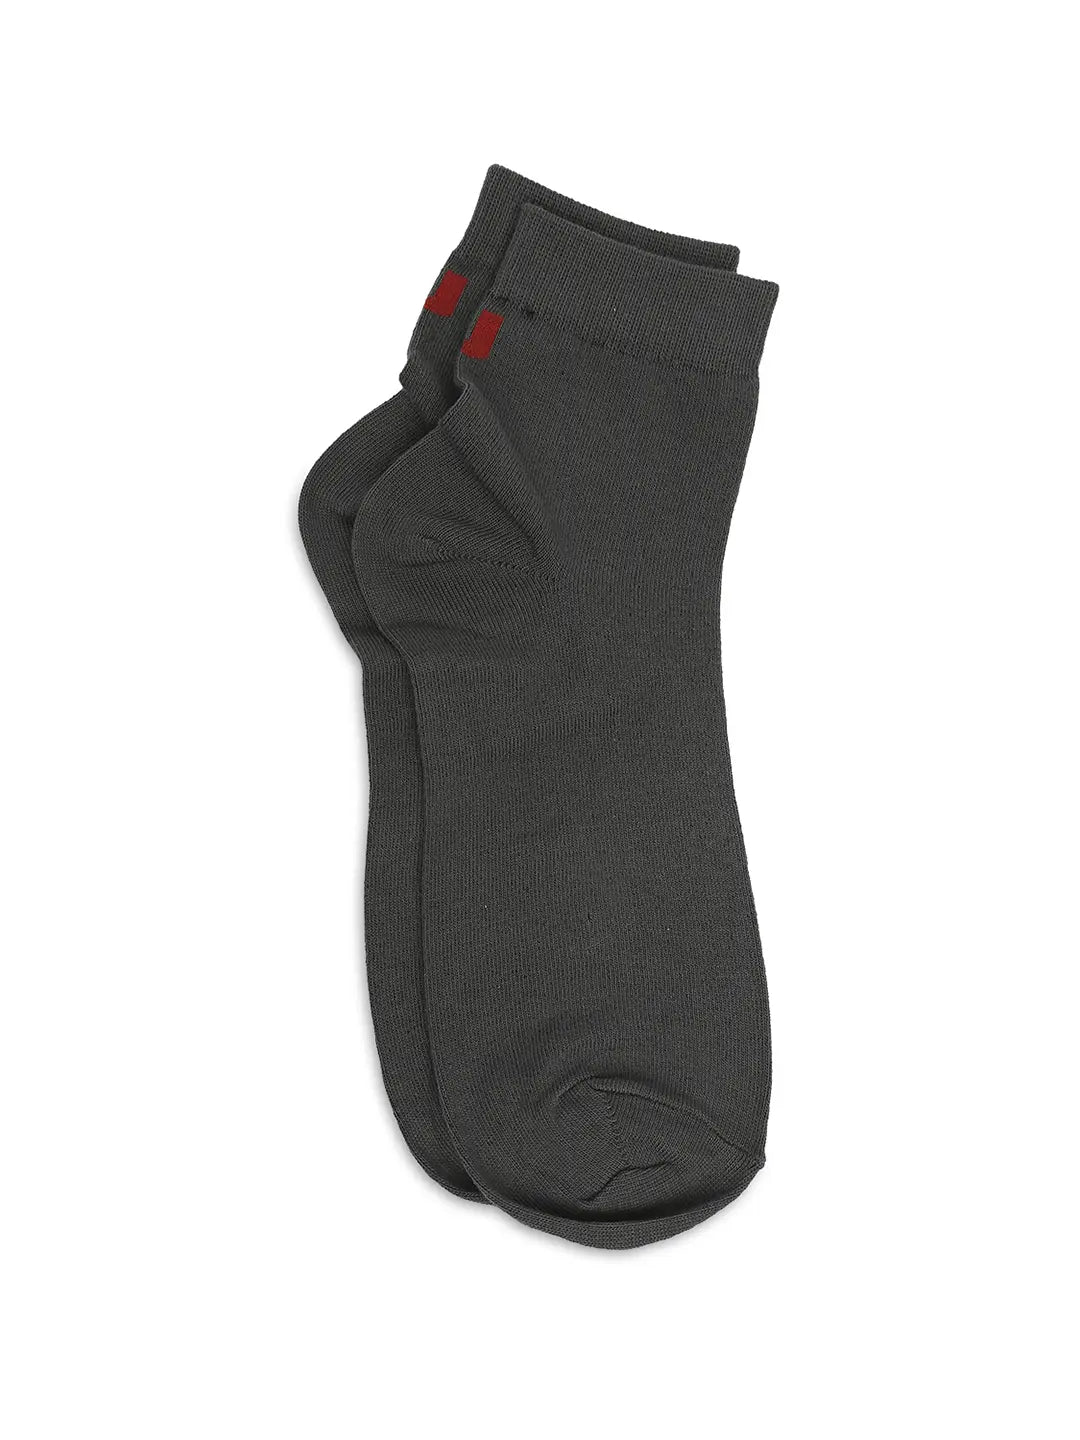 Men Premium Dark Blue & Grey Ankle Length Socks - Pack Of 2- Underjeans by Spykar